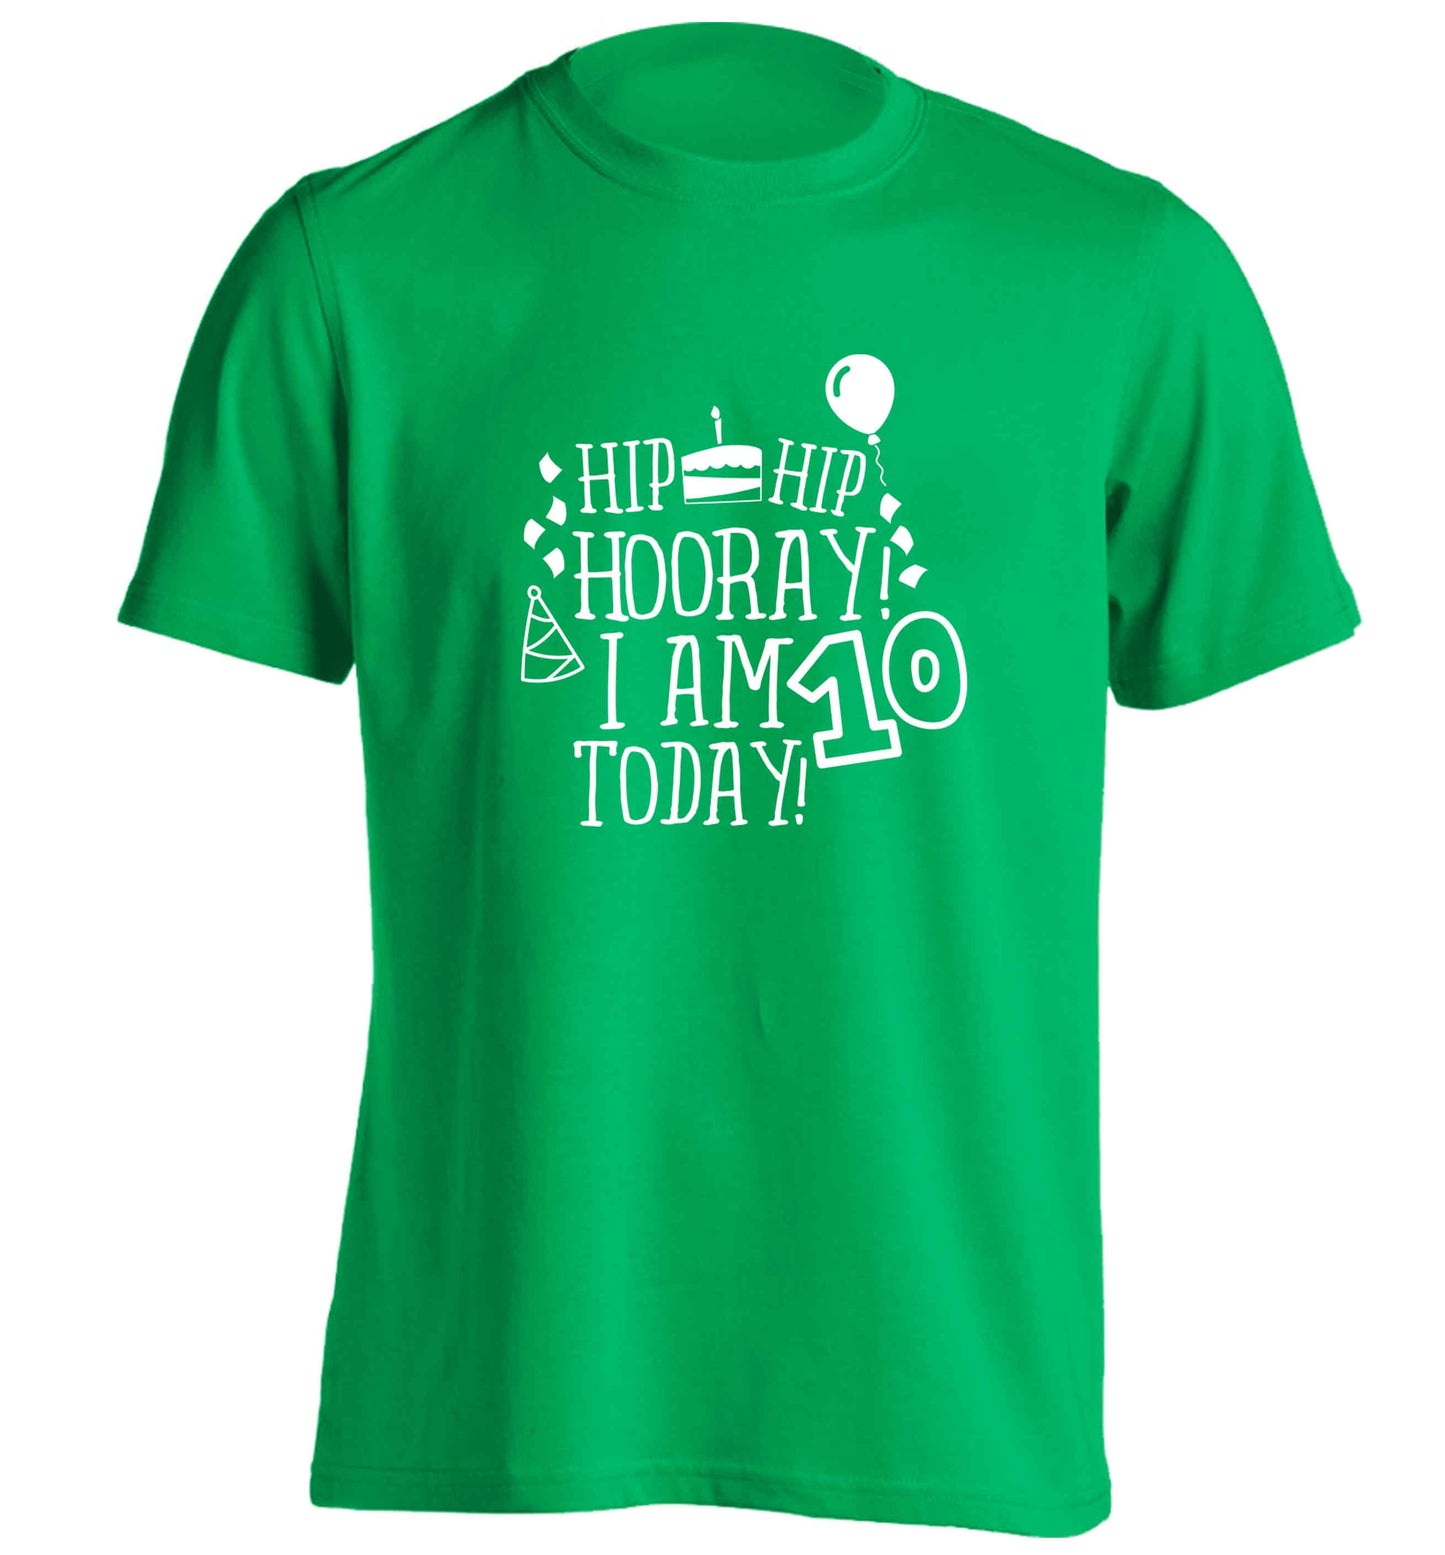 Hip hip hooray I am ten today! adults unisex green Tshirt 2XL